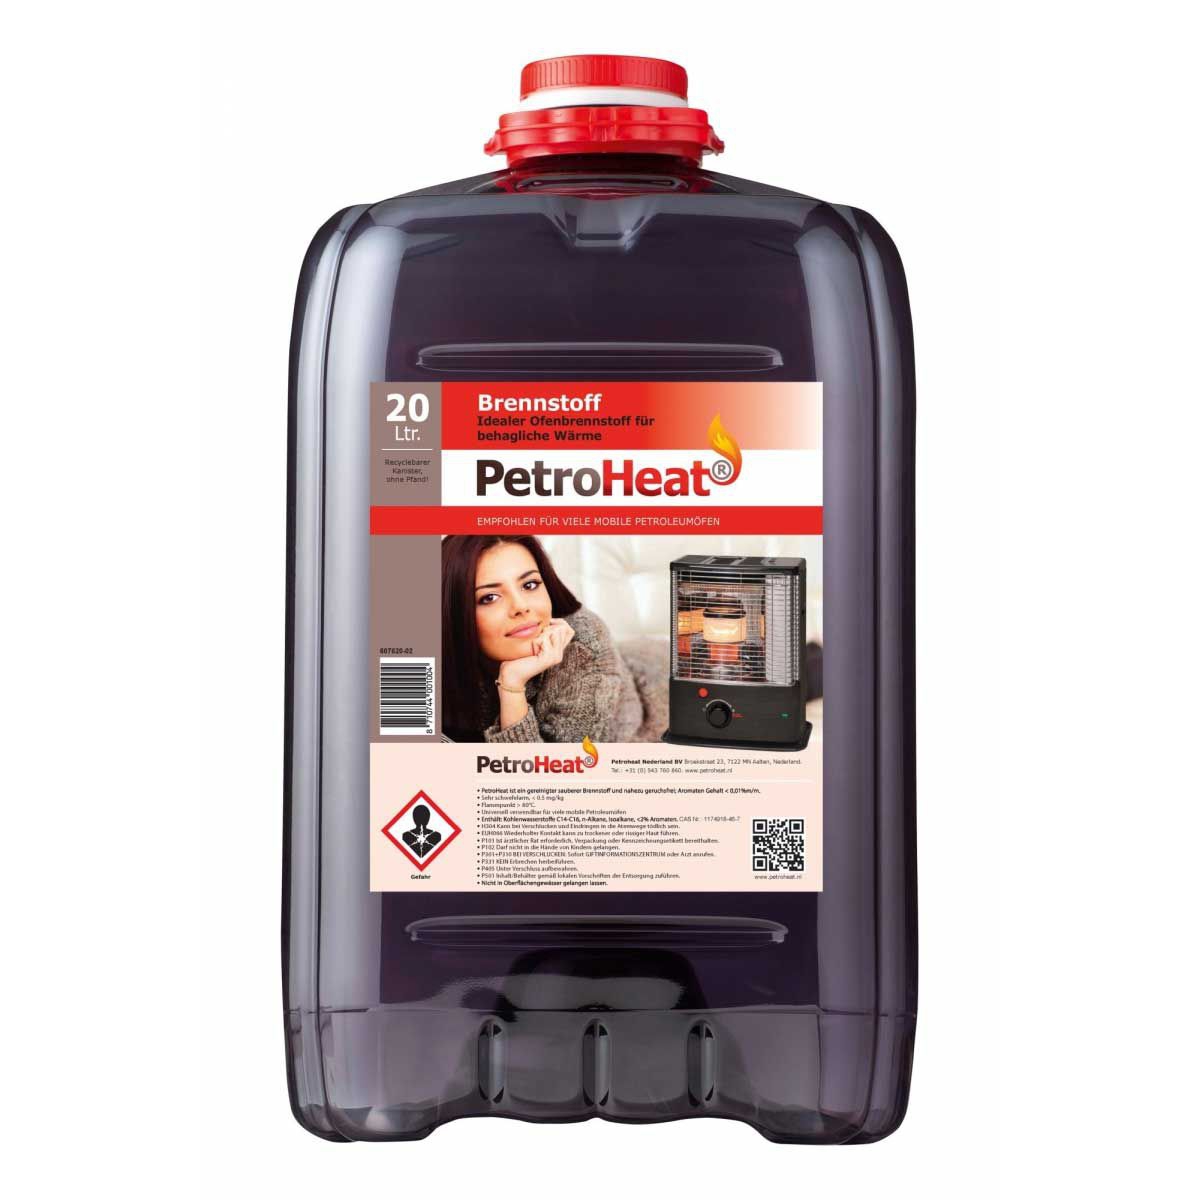 PetroHeat Brennstoff 850006